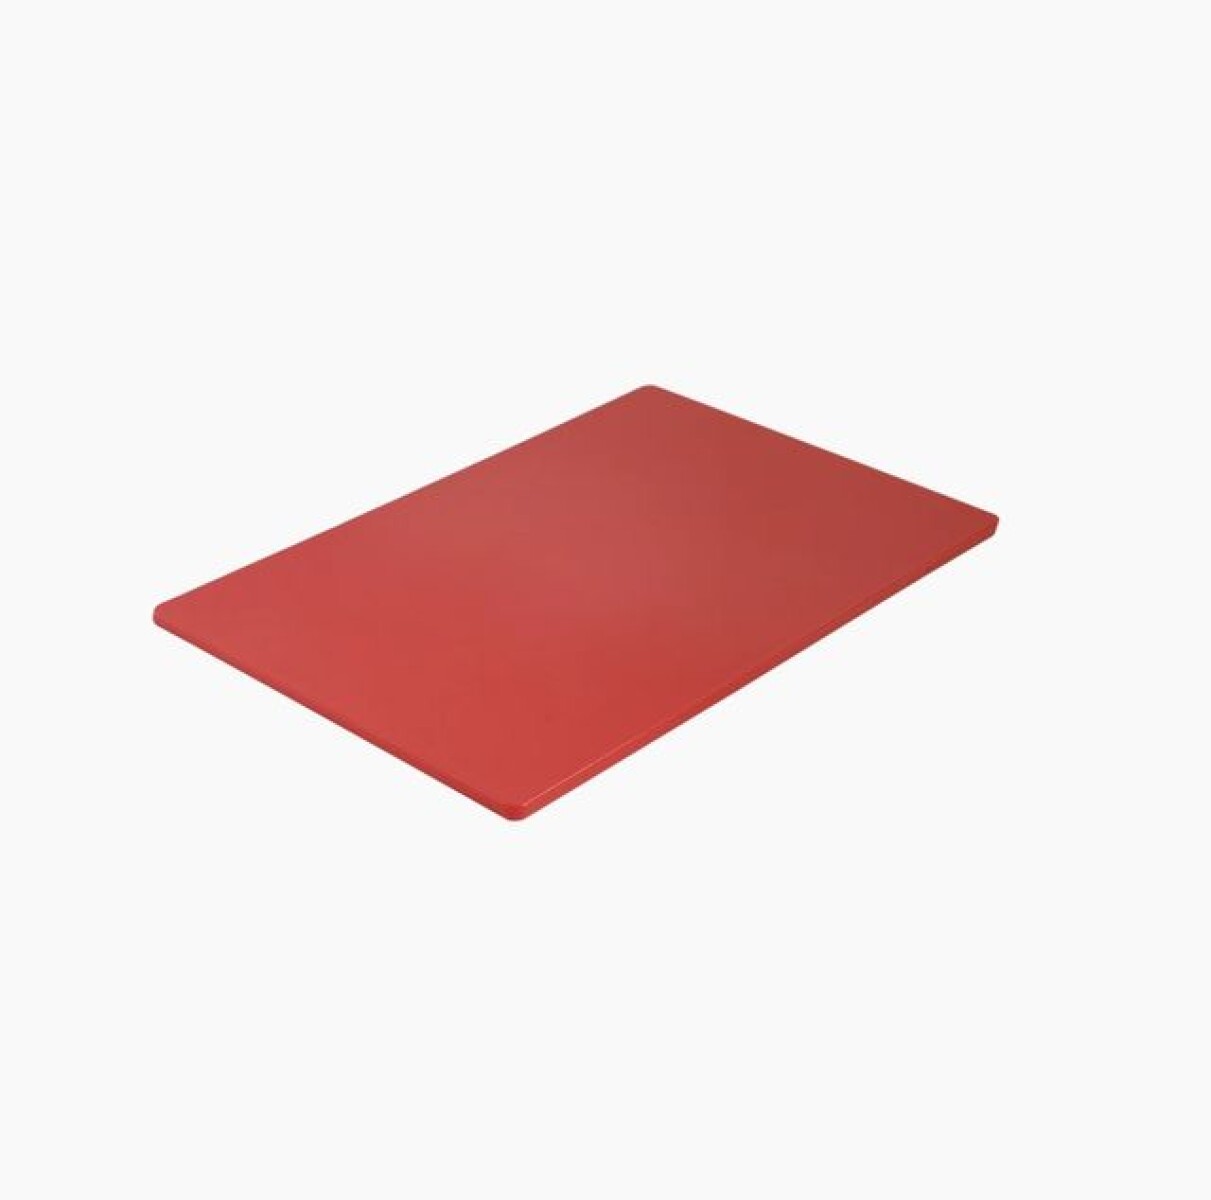 Tabla corte Roja 45x61x1.3cm 